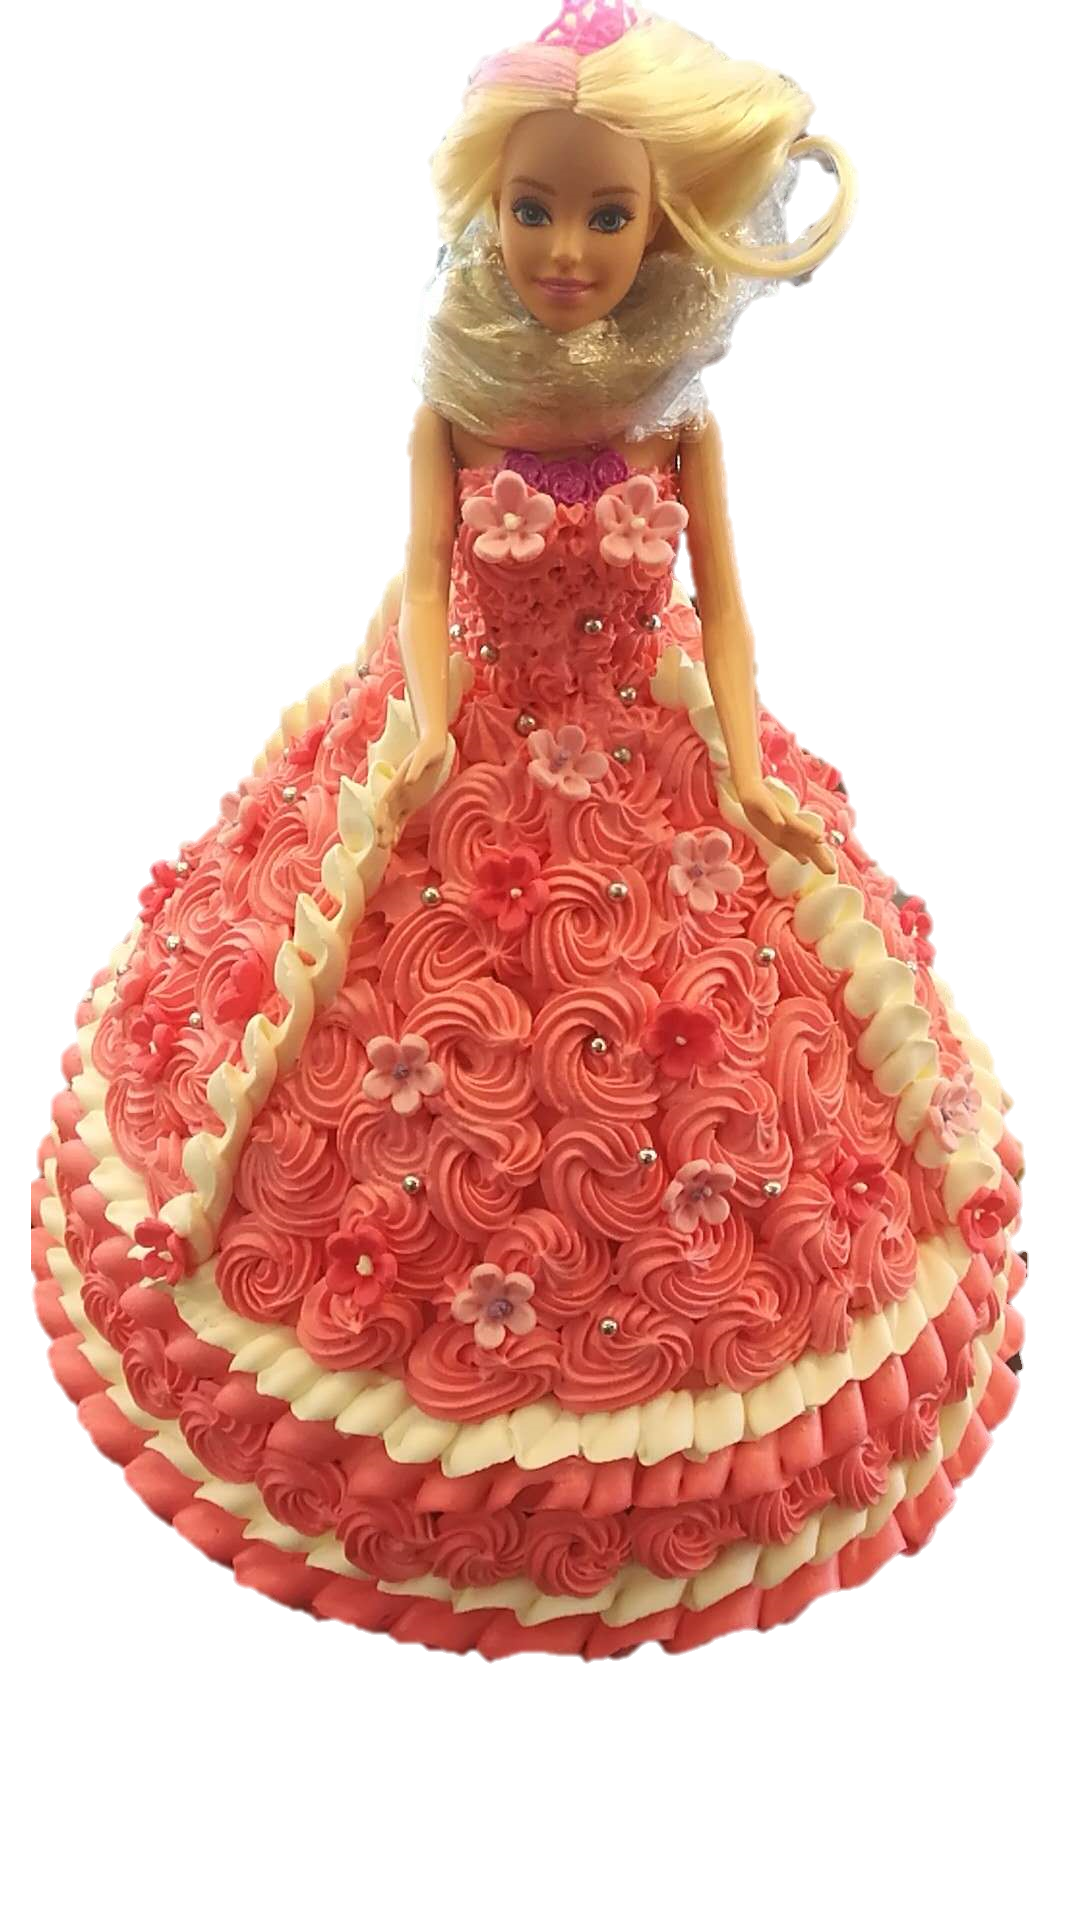 Premium PSD | Barbie doll cake png illustration